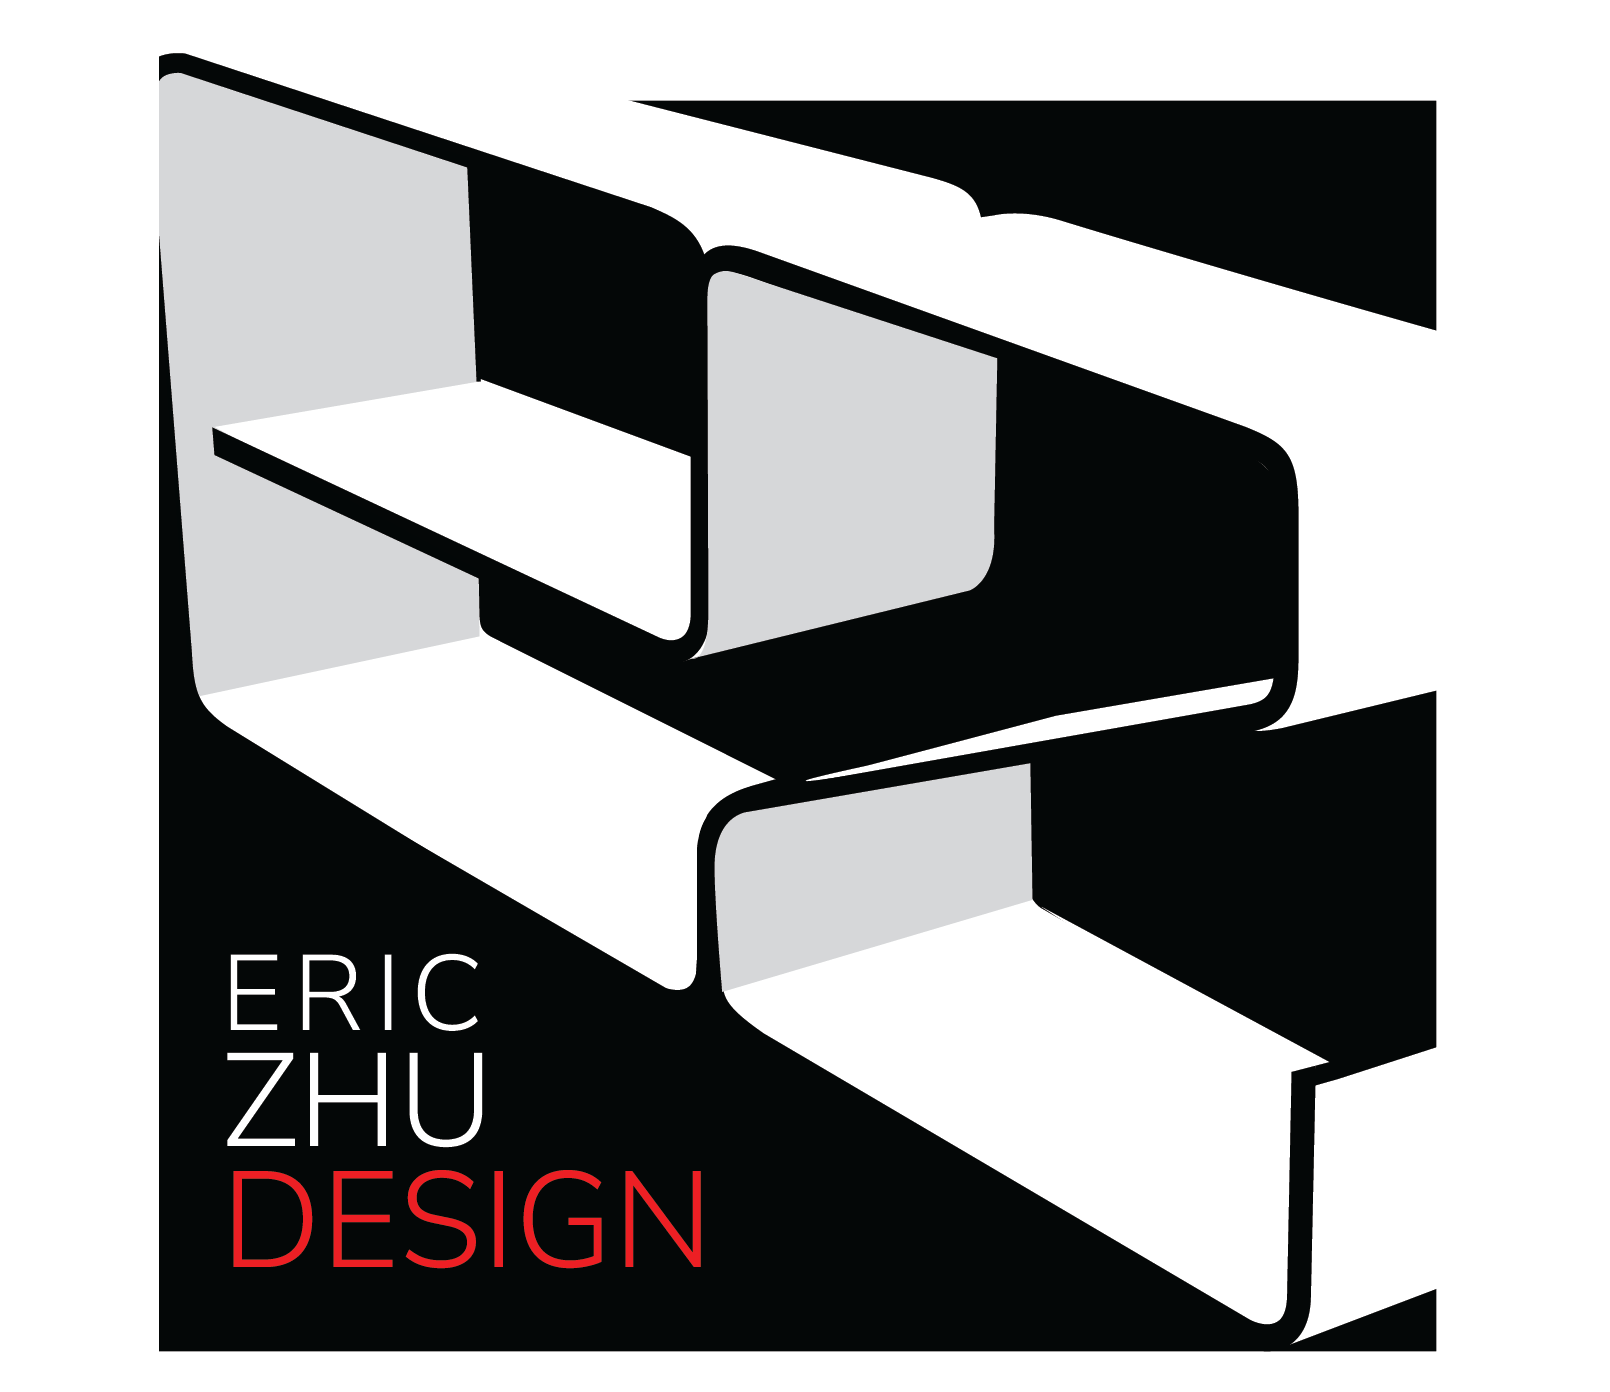 Eric Zhu Design